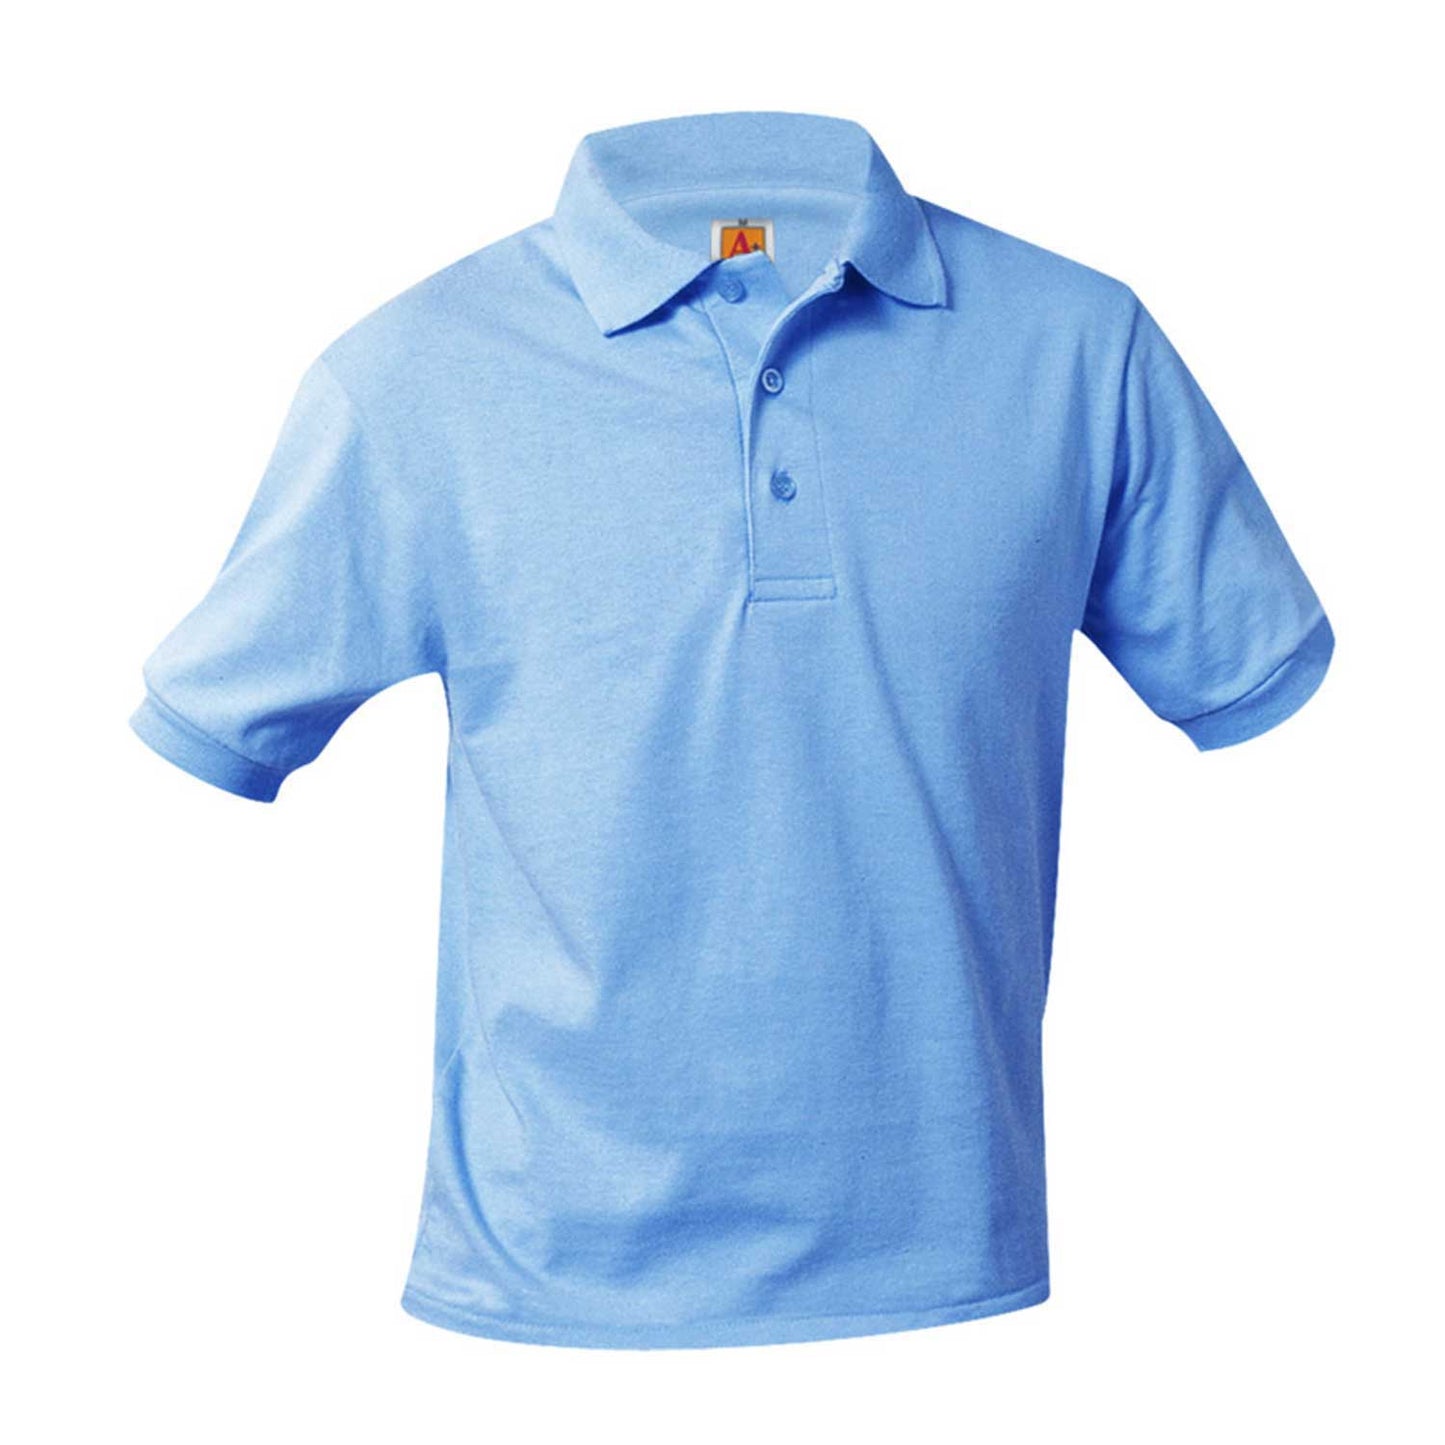 St. James Knit Polo Short-Sleeve Shirt (Unisex)